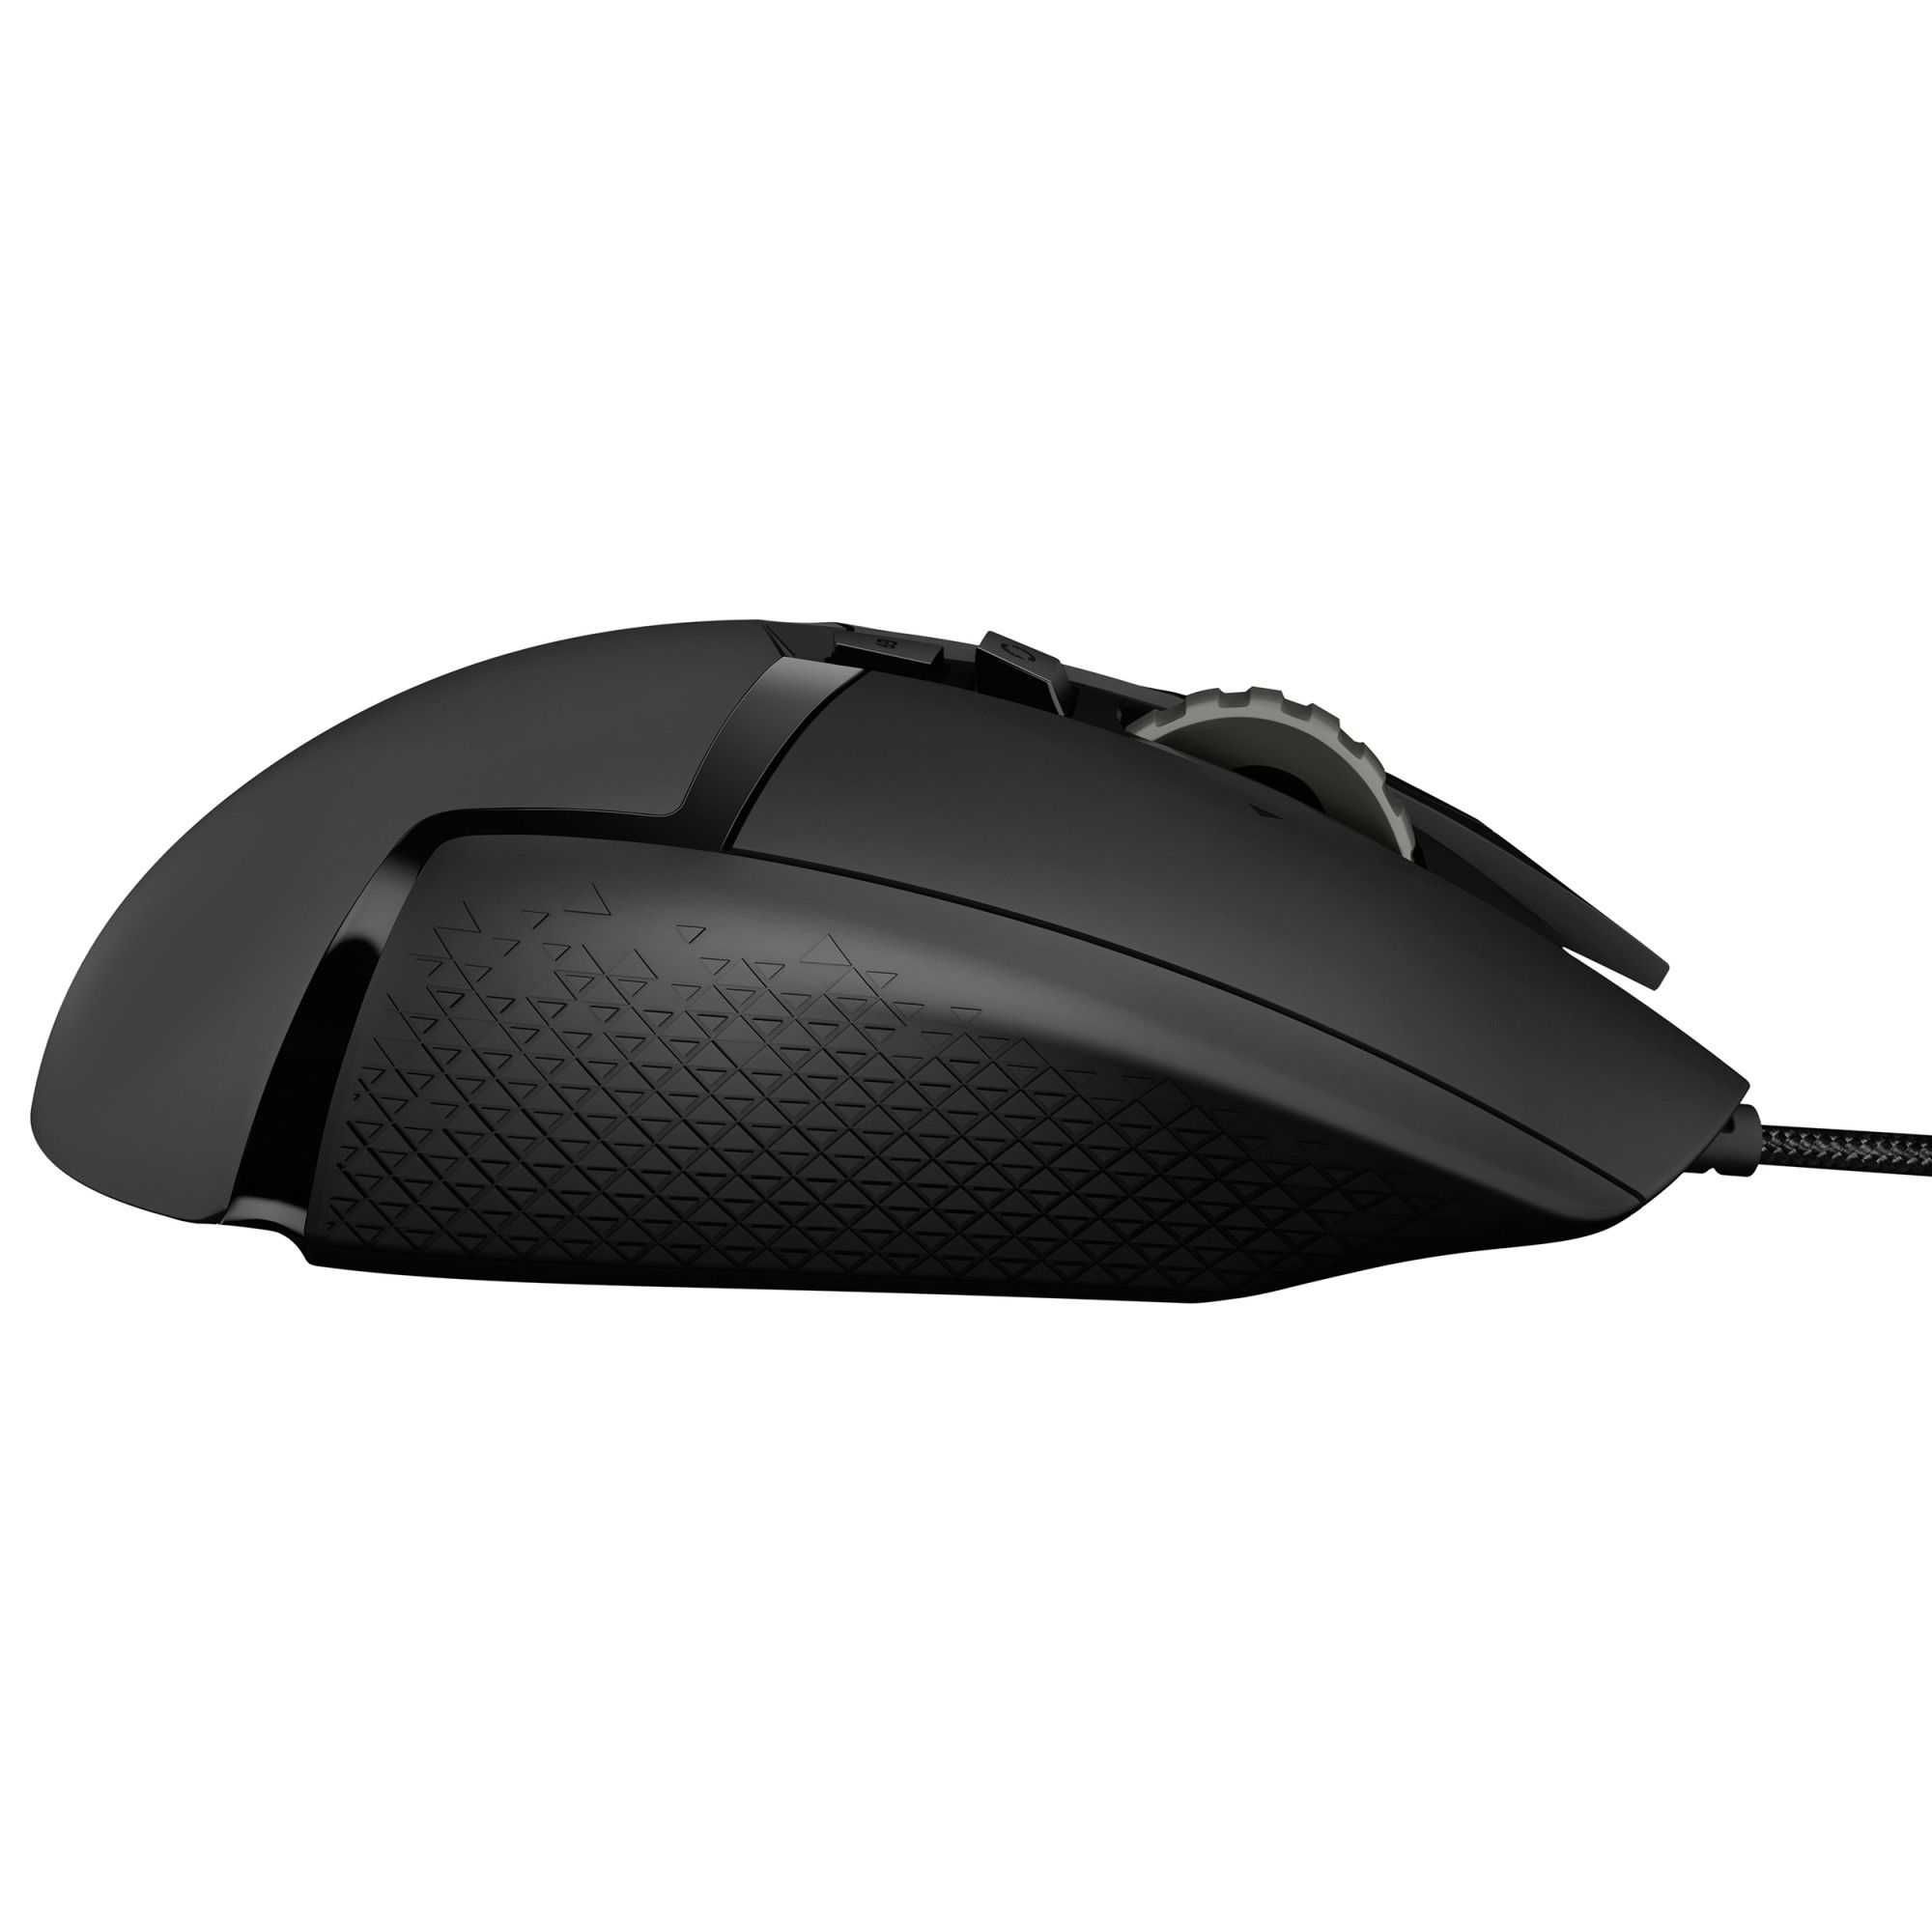 Mouse Gaming Logitech G502 Hero Wired NOU SIGILAT sau Razer RGB